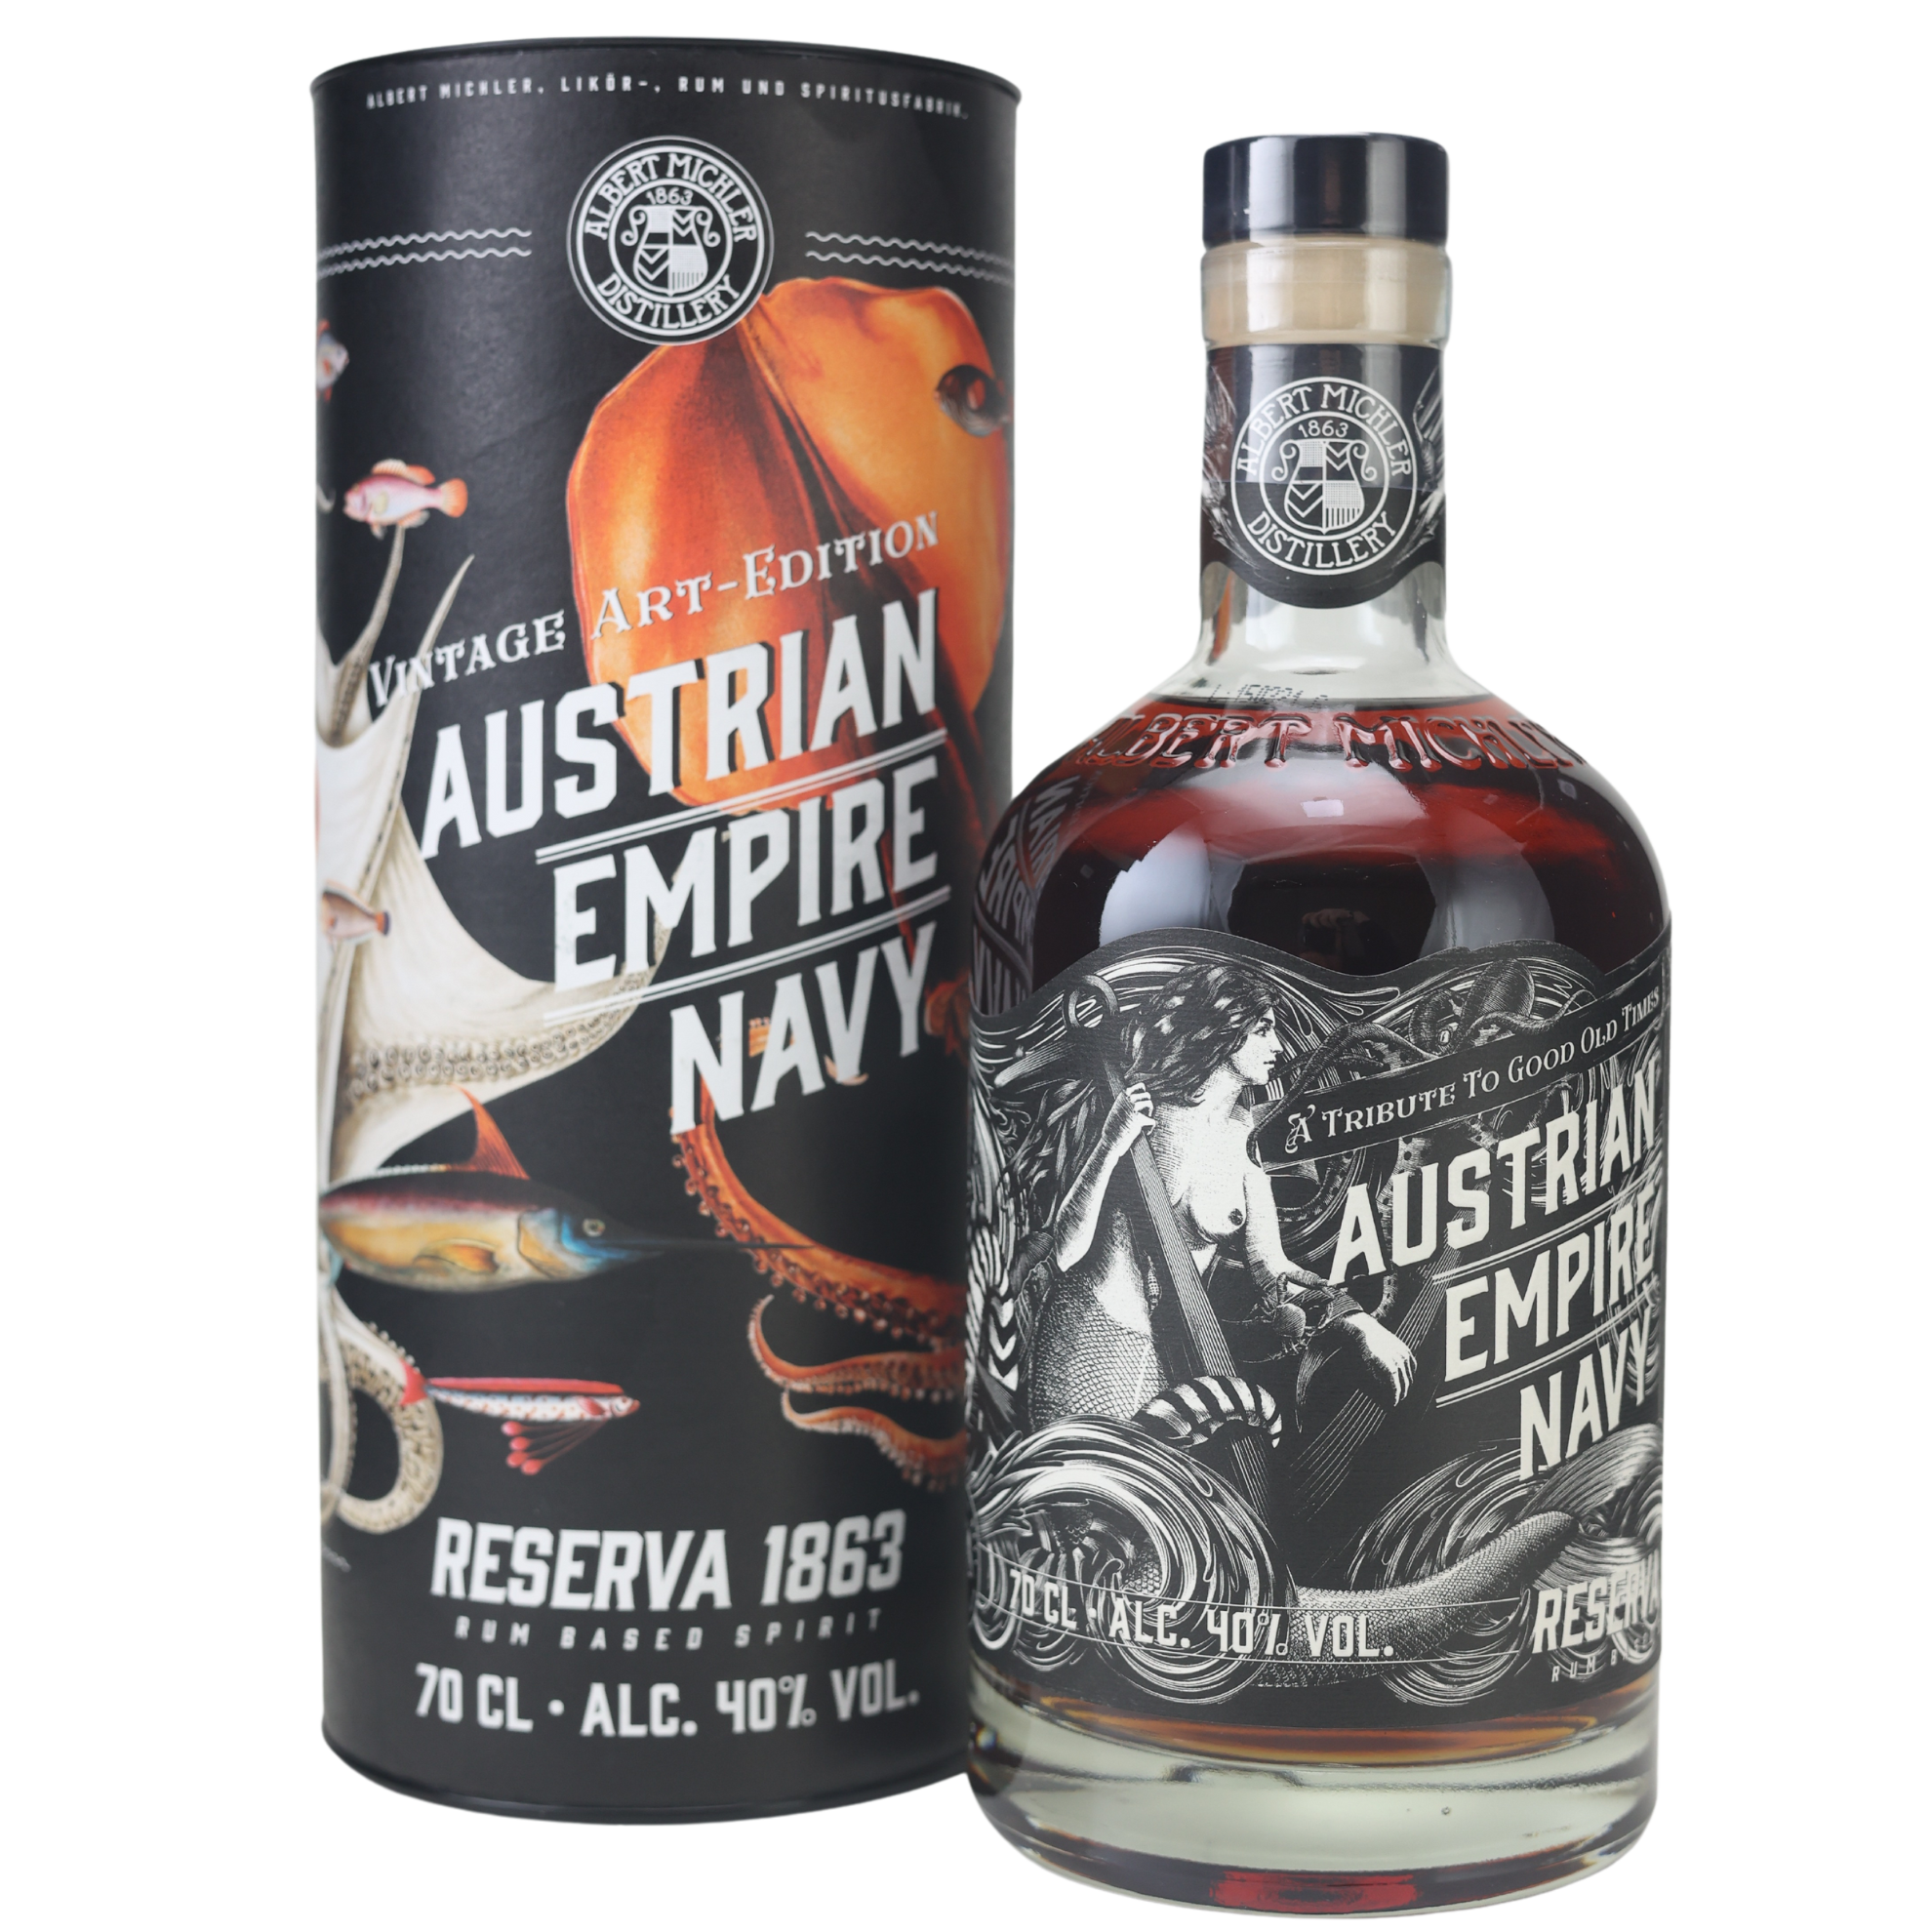 Austrian Empire Navy Reserve 1863 Vintage Art Edition (Rum-Basis) 40% 0,7l